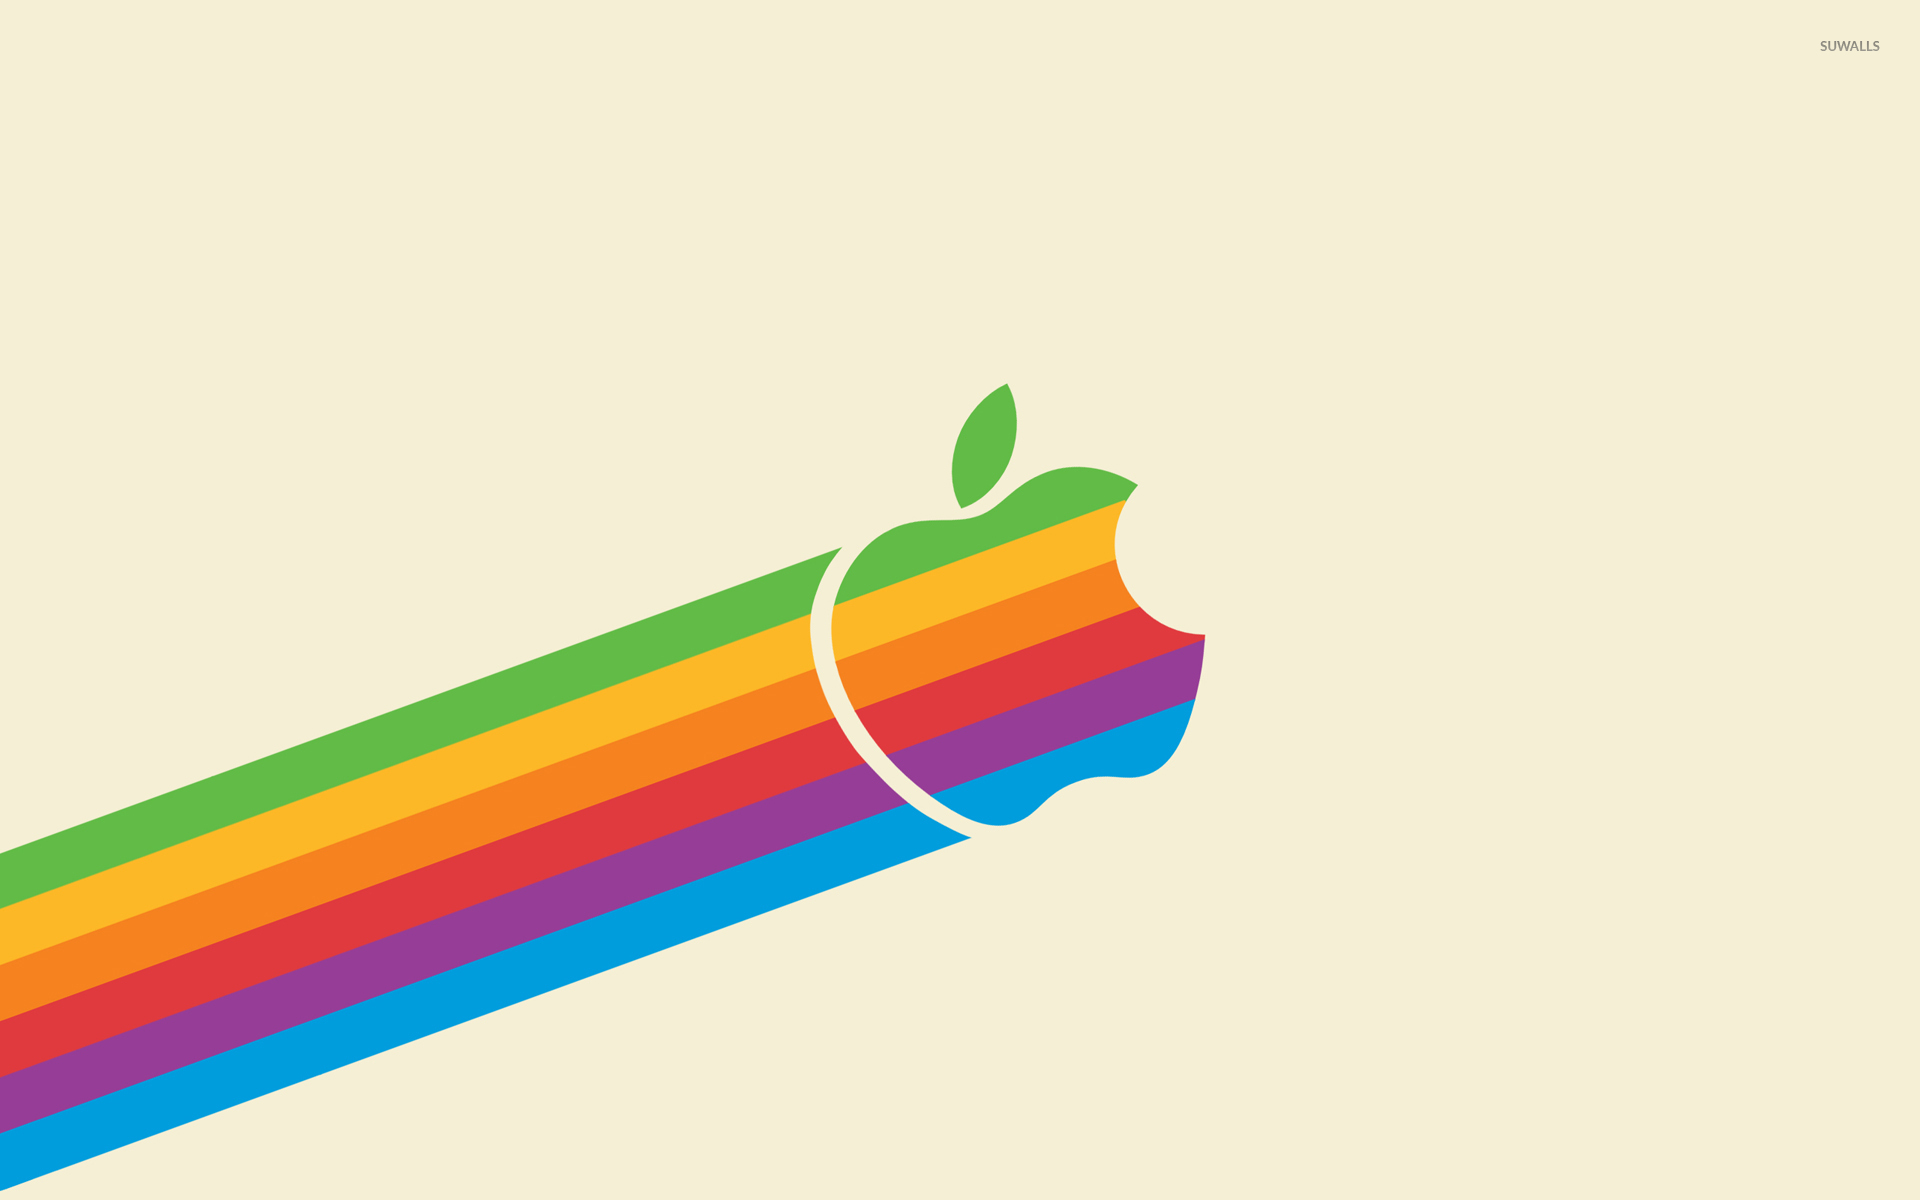 Rainbow Apple logo wallpaper - Computer wallpapers - #54047